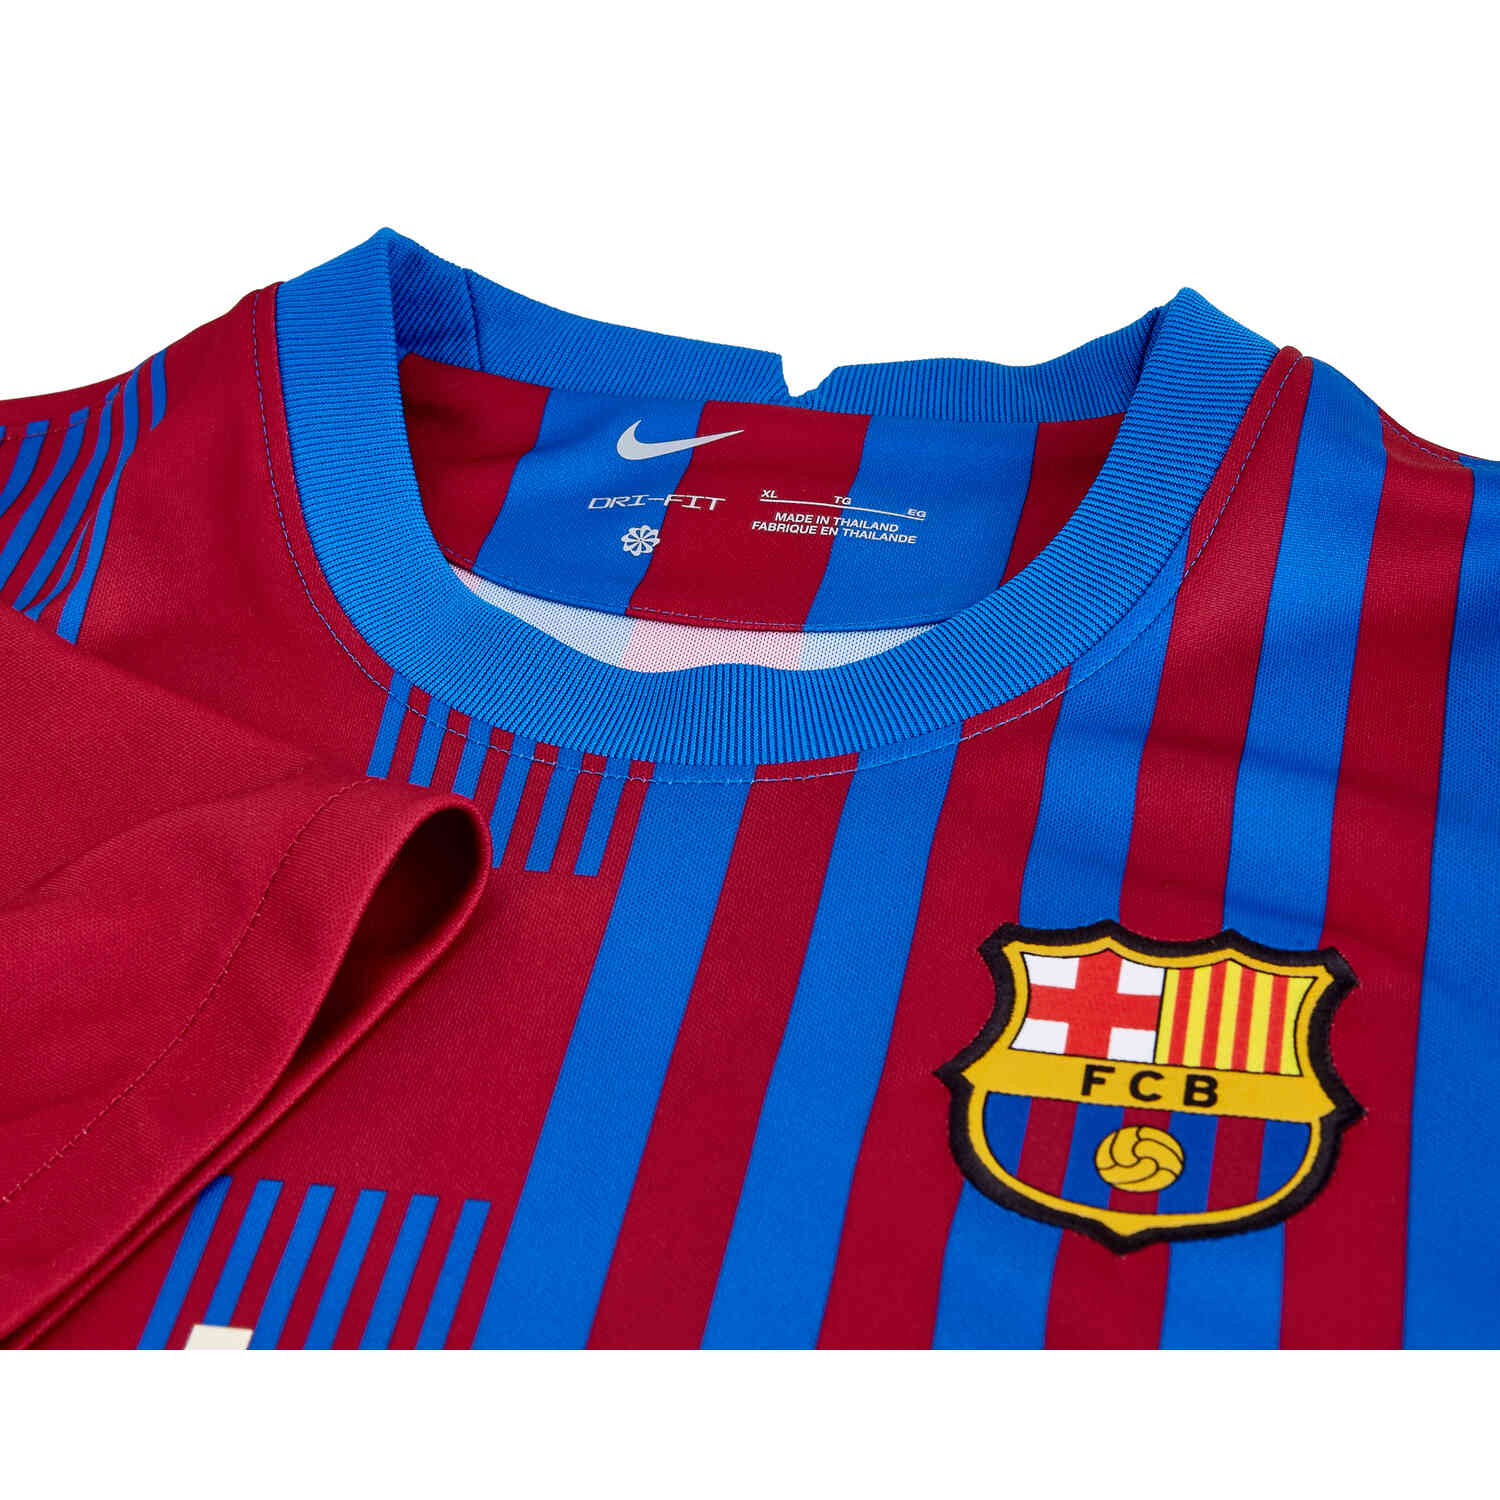 امازون سوق كوم 2021/22 Nike Barcelona Home Jersey - SoccerPro امازون سوق كوم